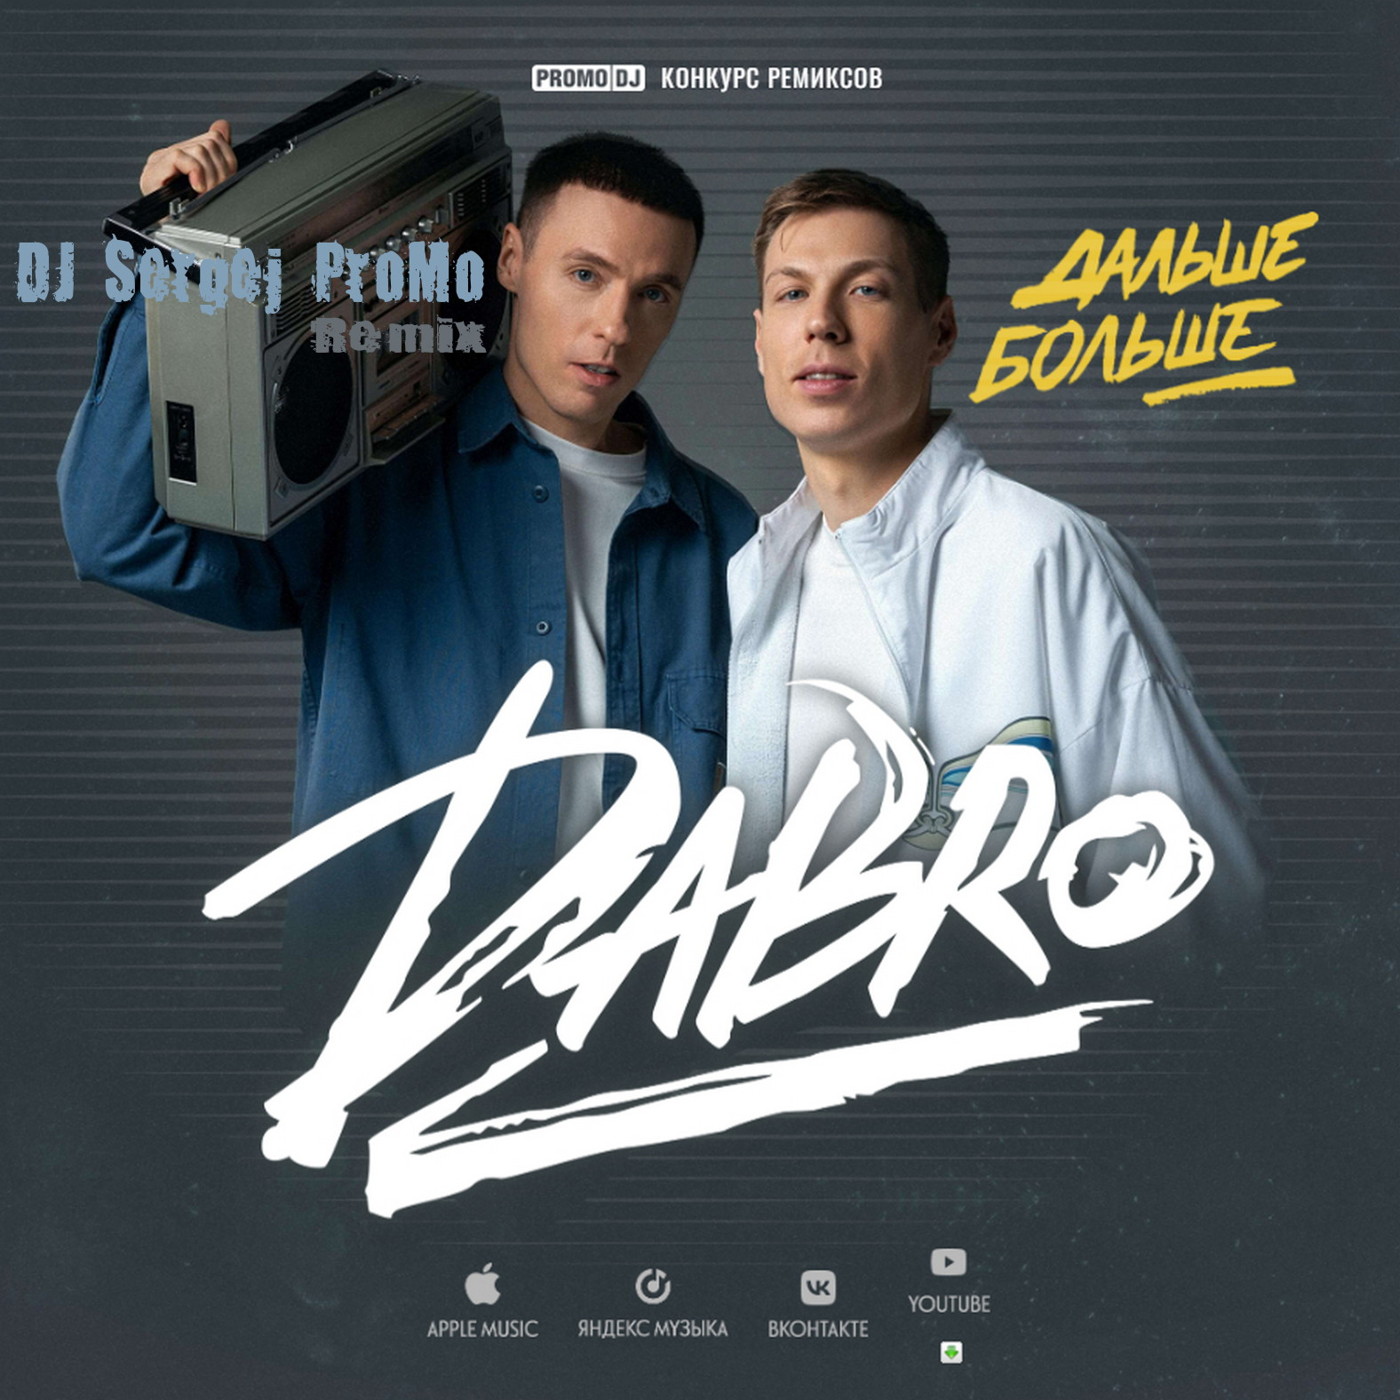 Dabro - Дальше-больше (DJ Sergej ProMo Remix)